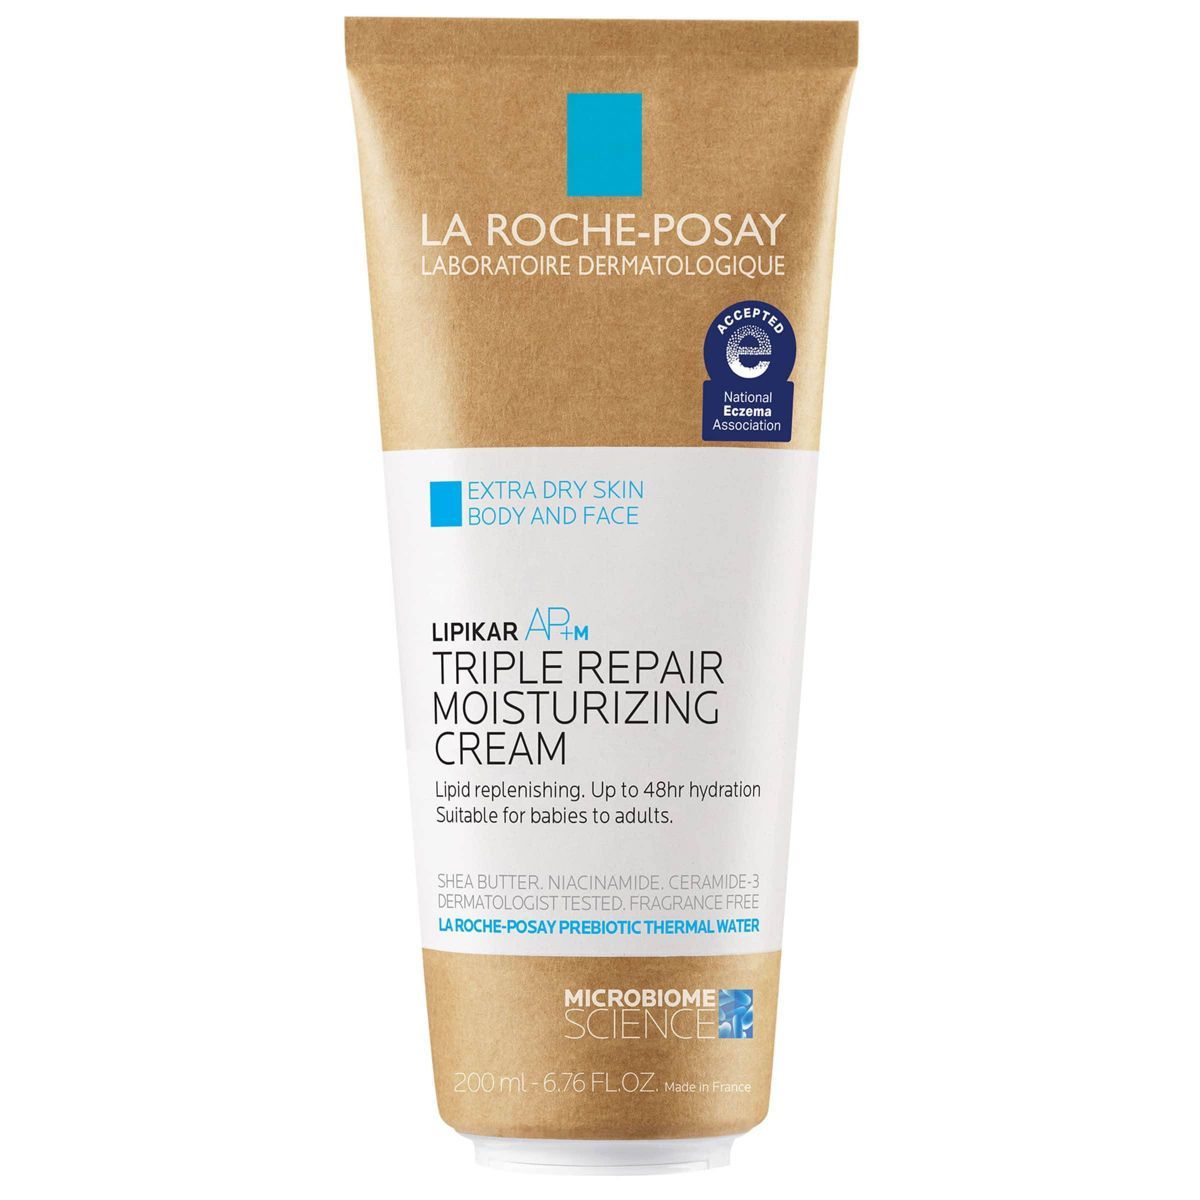 La Roche Posay Lipikar AP+M Triple Repair Face and Body Moisturizing Cream - 6.76oz | Target